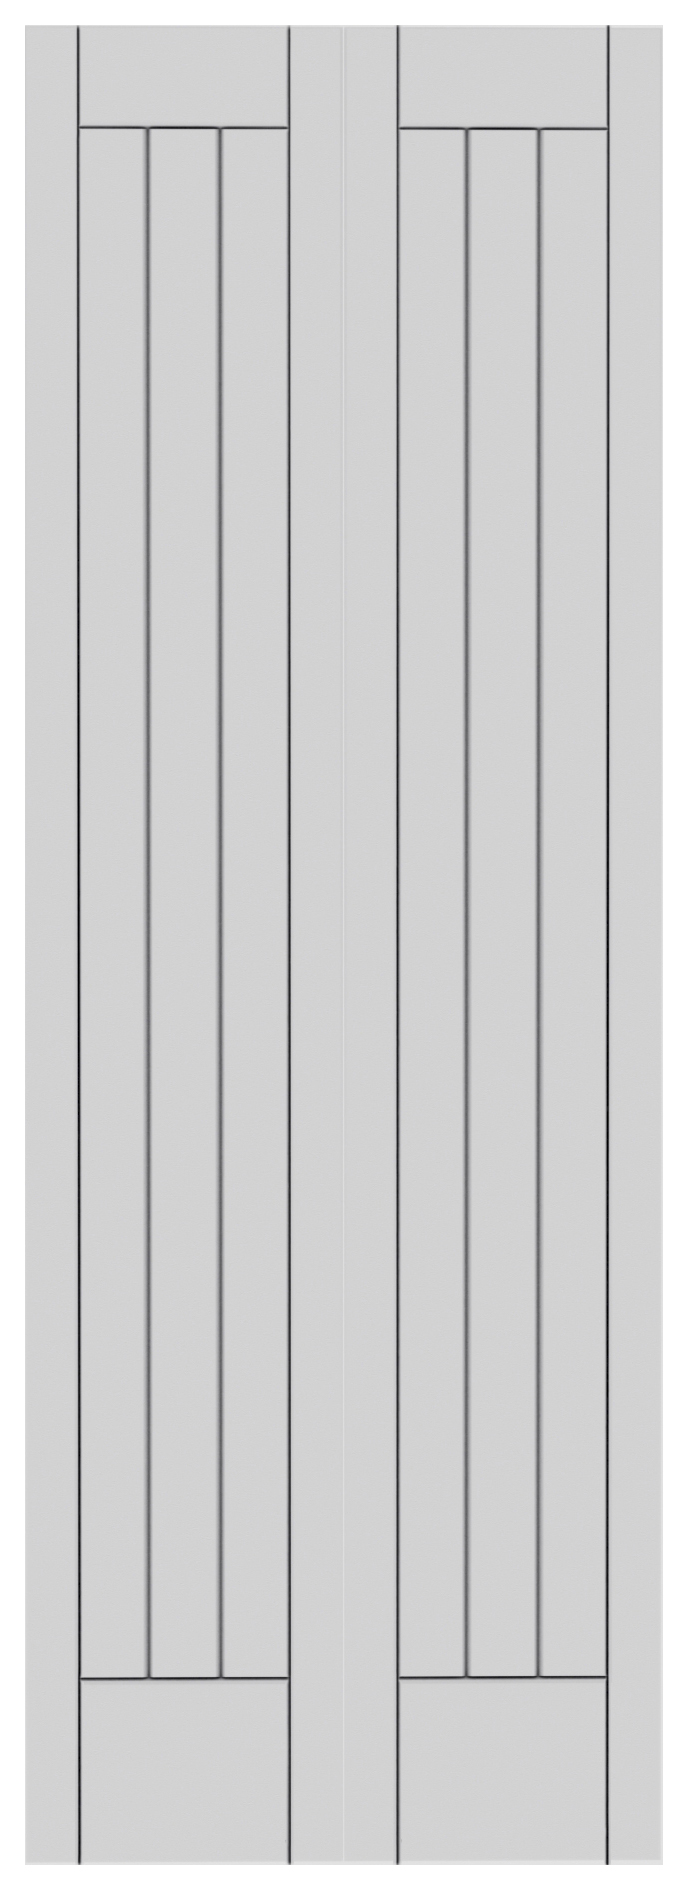 Image of Wickes Geneva White Primed Bi-Fold Solid Core Door - 1947 x 750mm